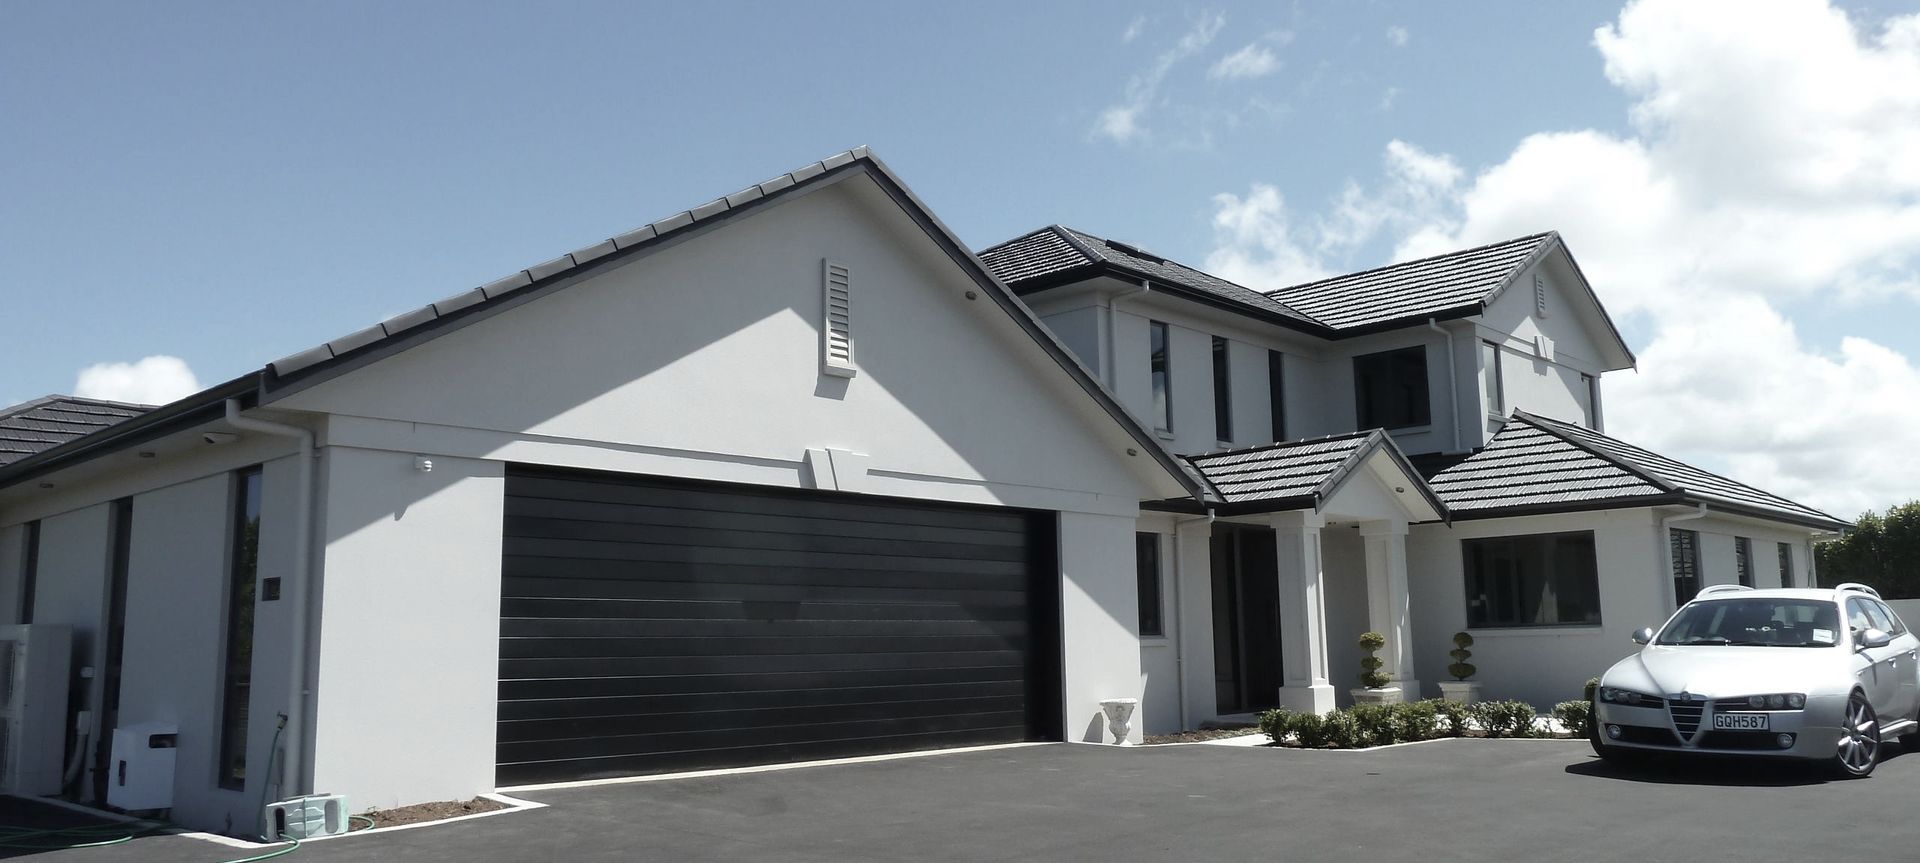 New Home, Wanganui banner